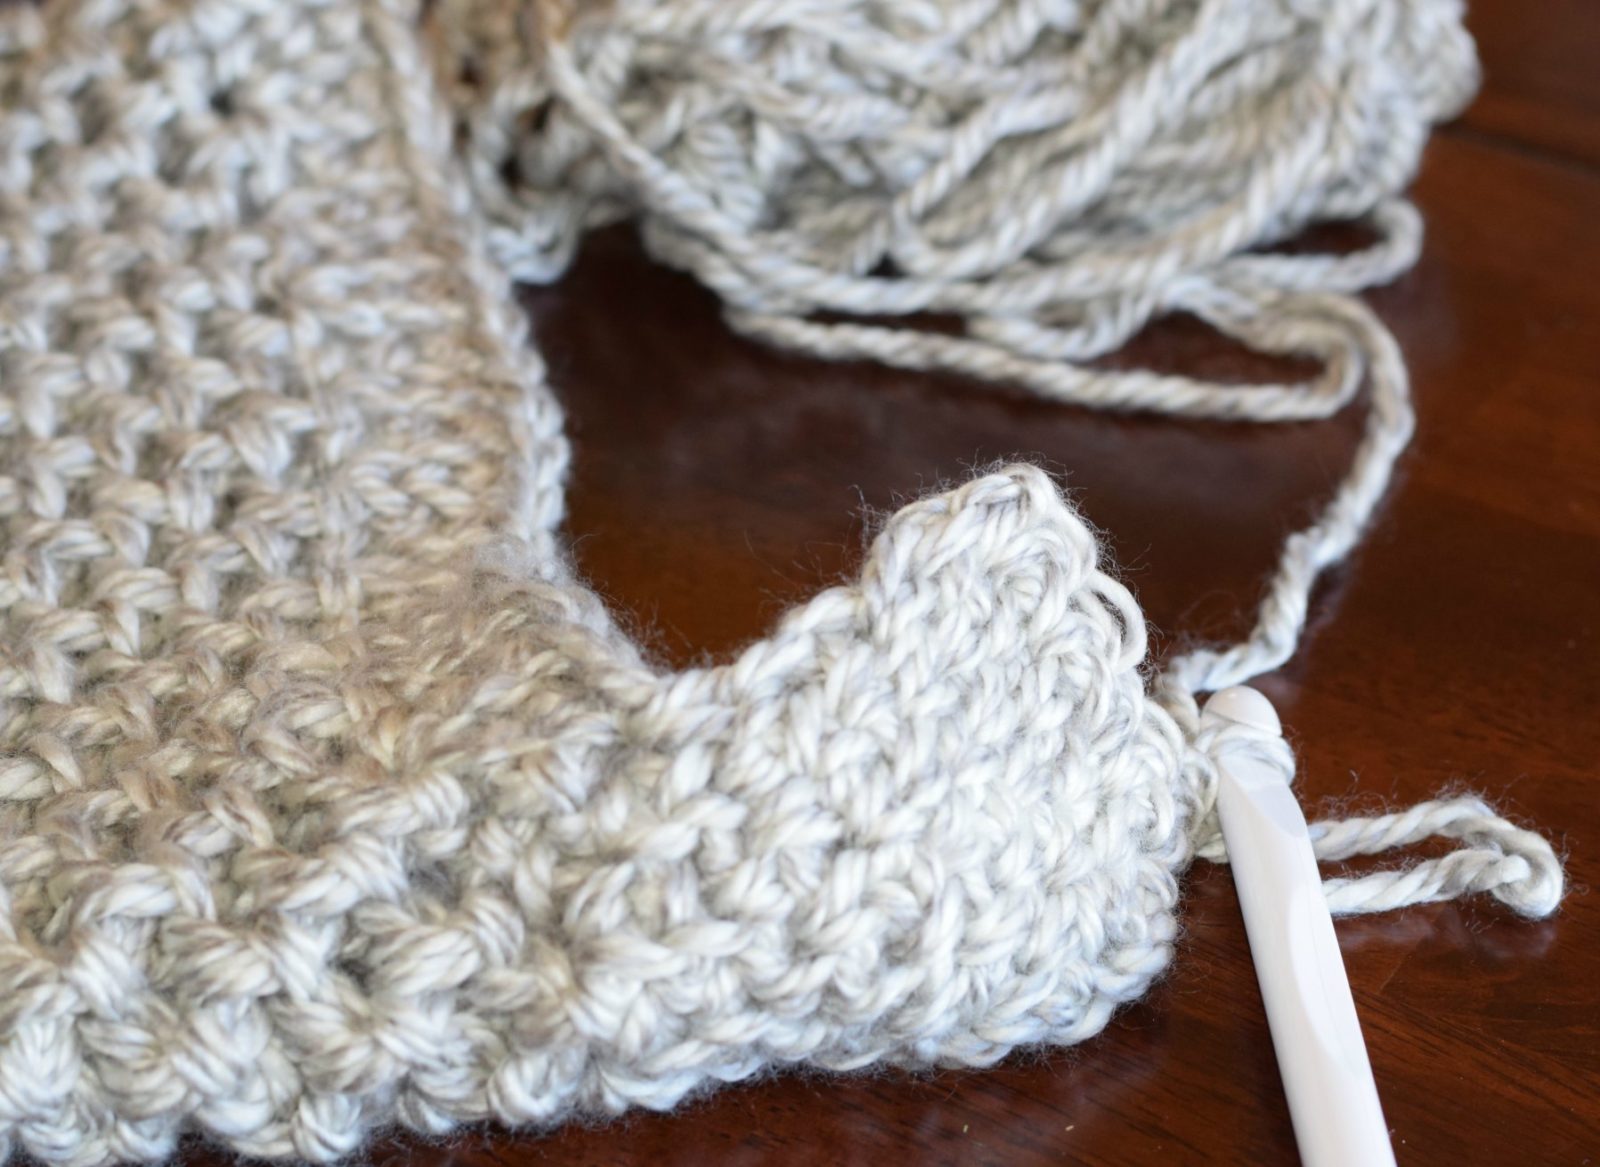 Glenwood Tote Bag Knitting Patterns – Mama In A Stitch